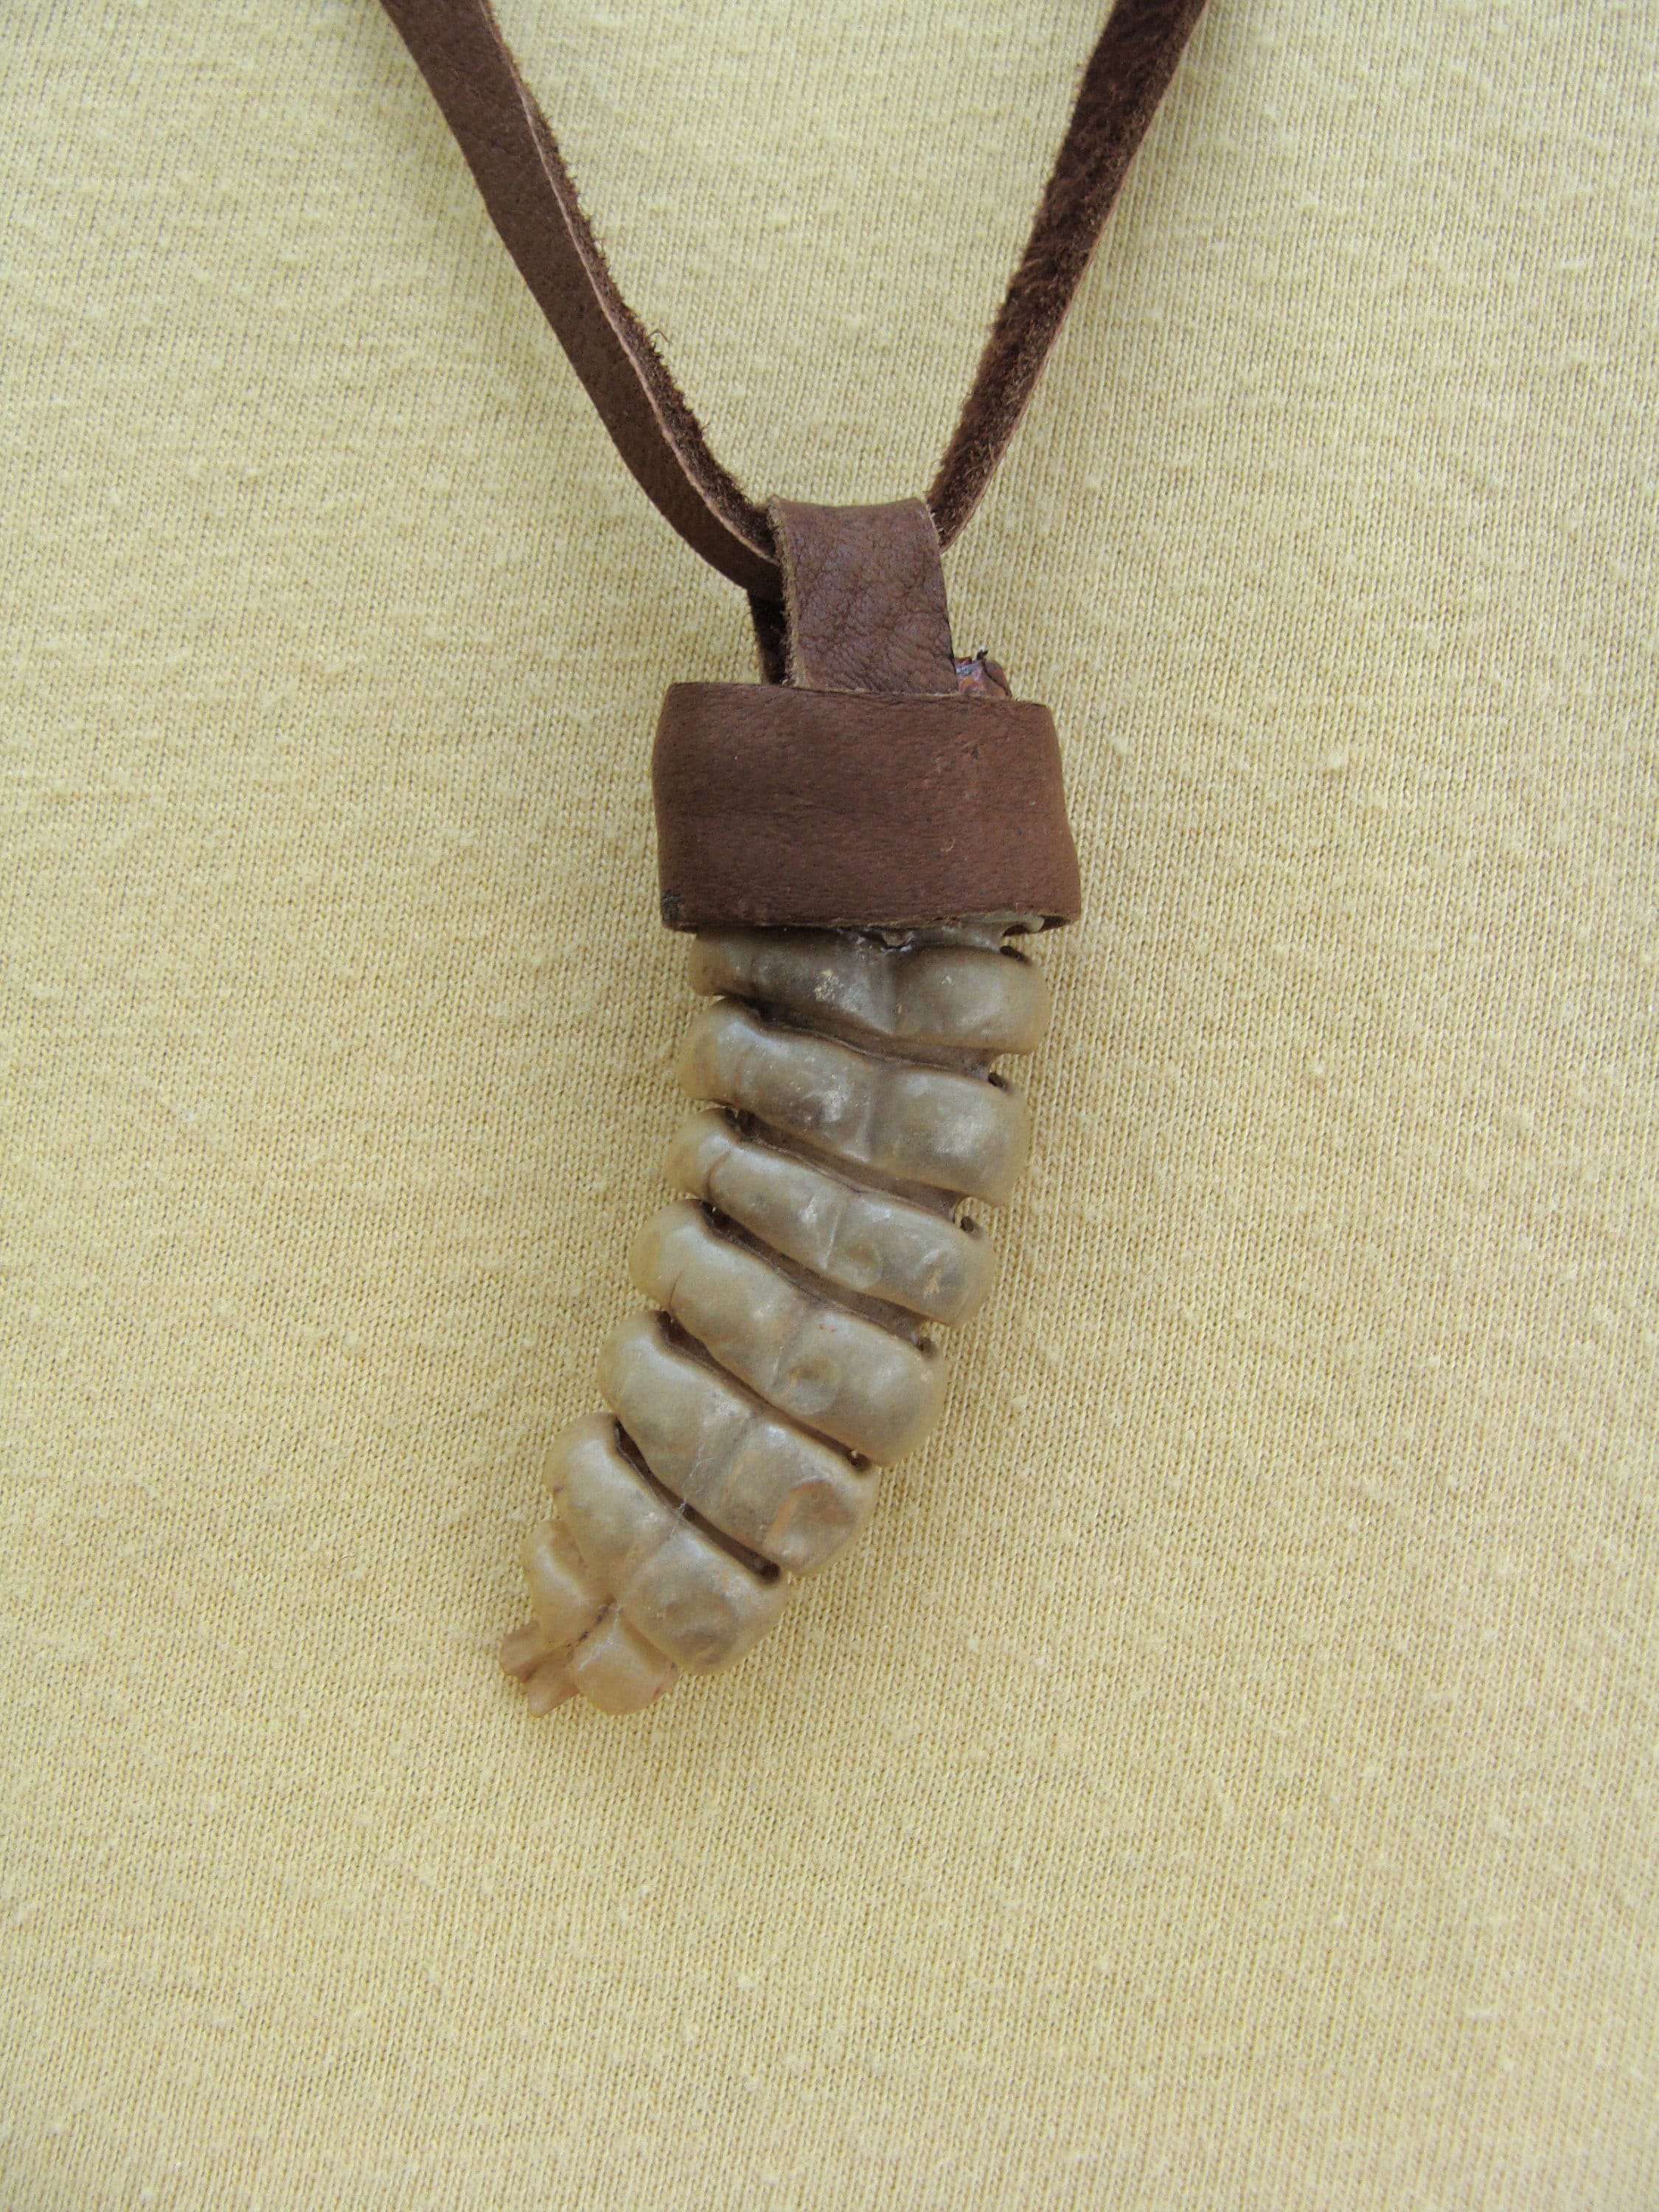 Western Diamondback Rattlesnake Rattle Necklace | eBay